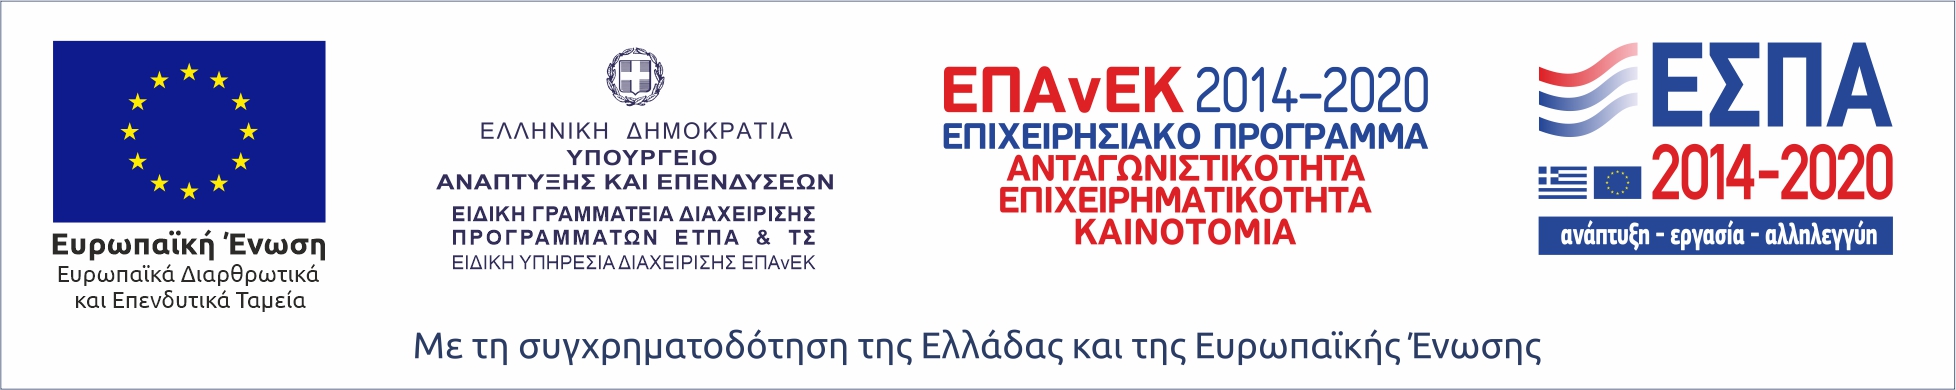 epanek banner